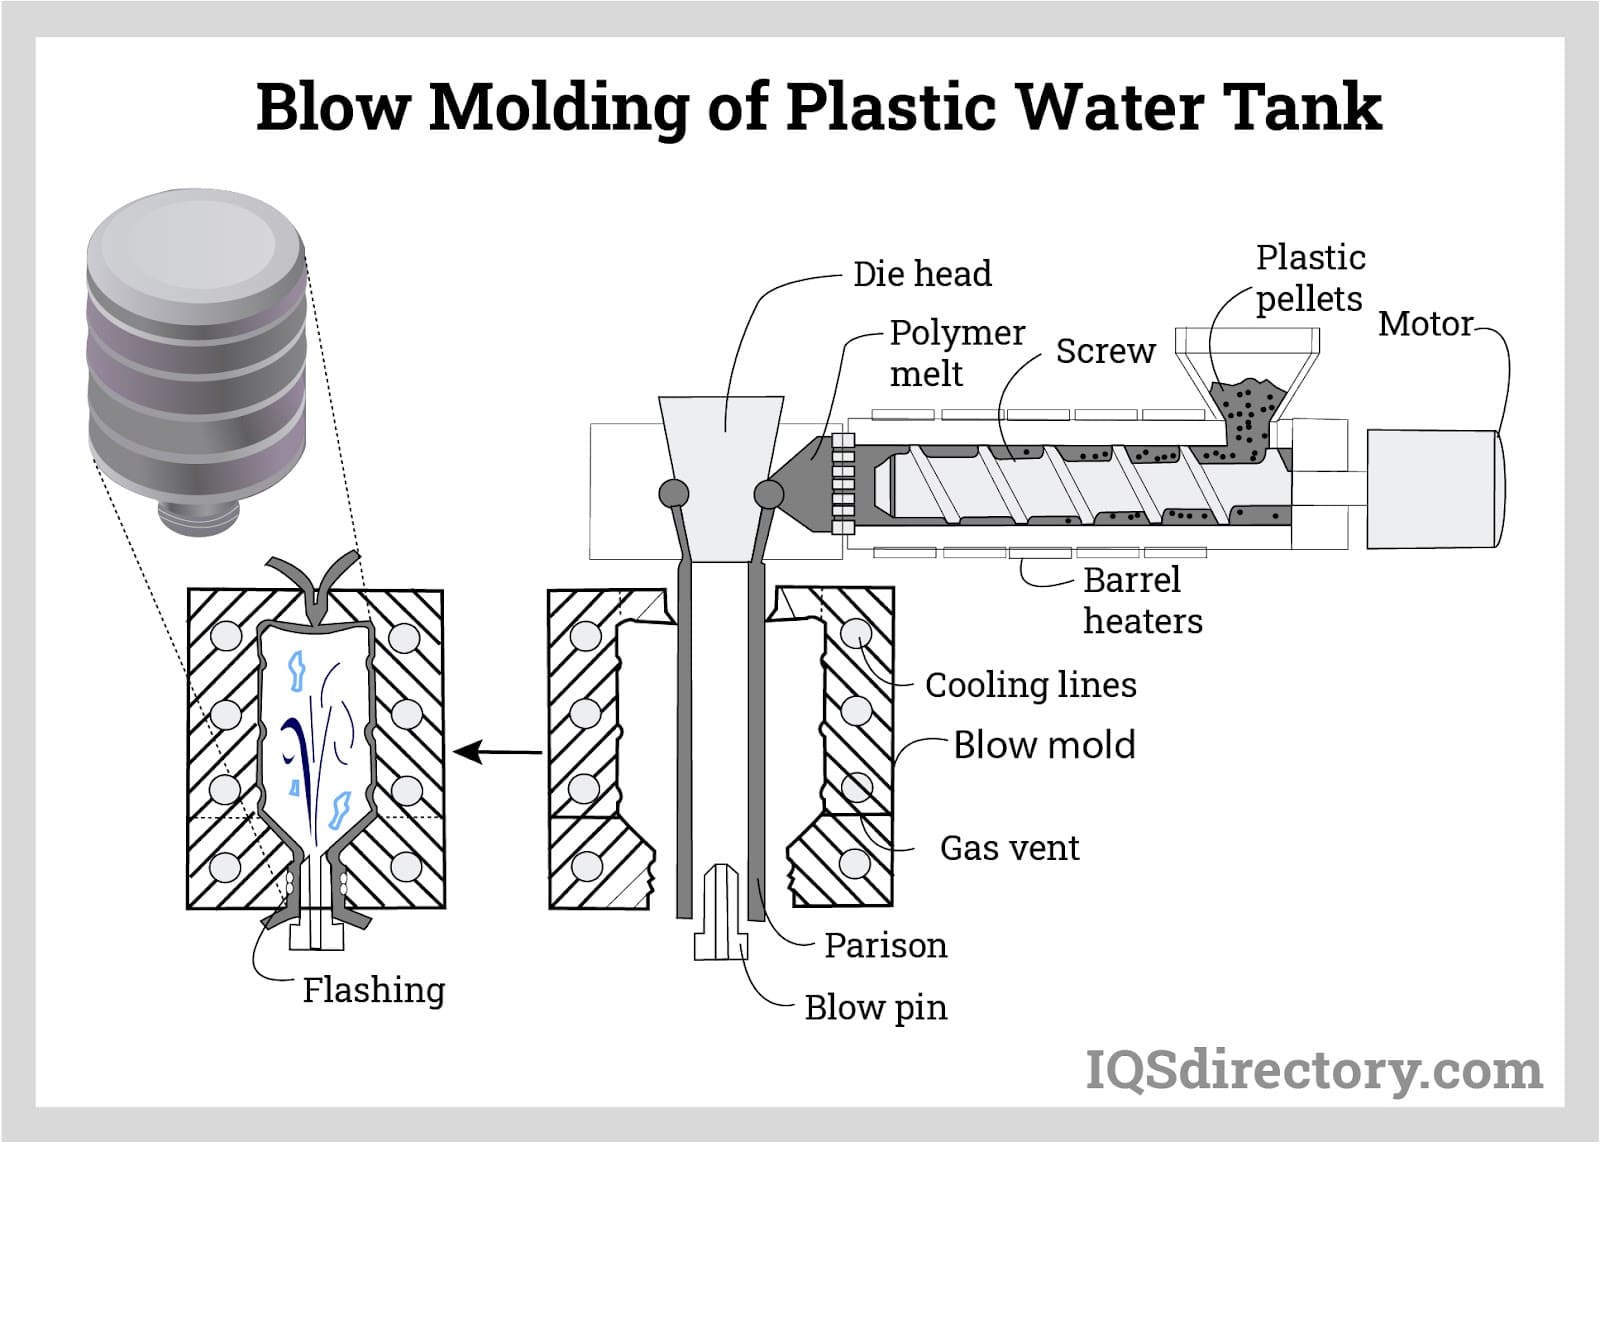 Blow Molding of Plastic Water Tank